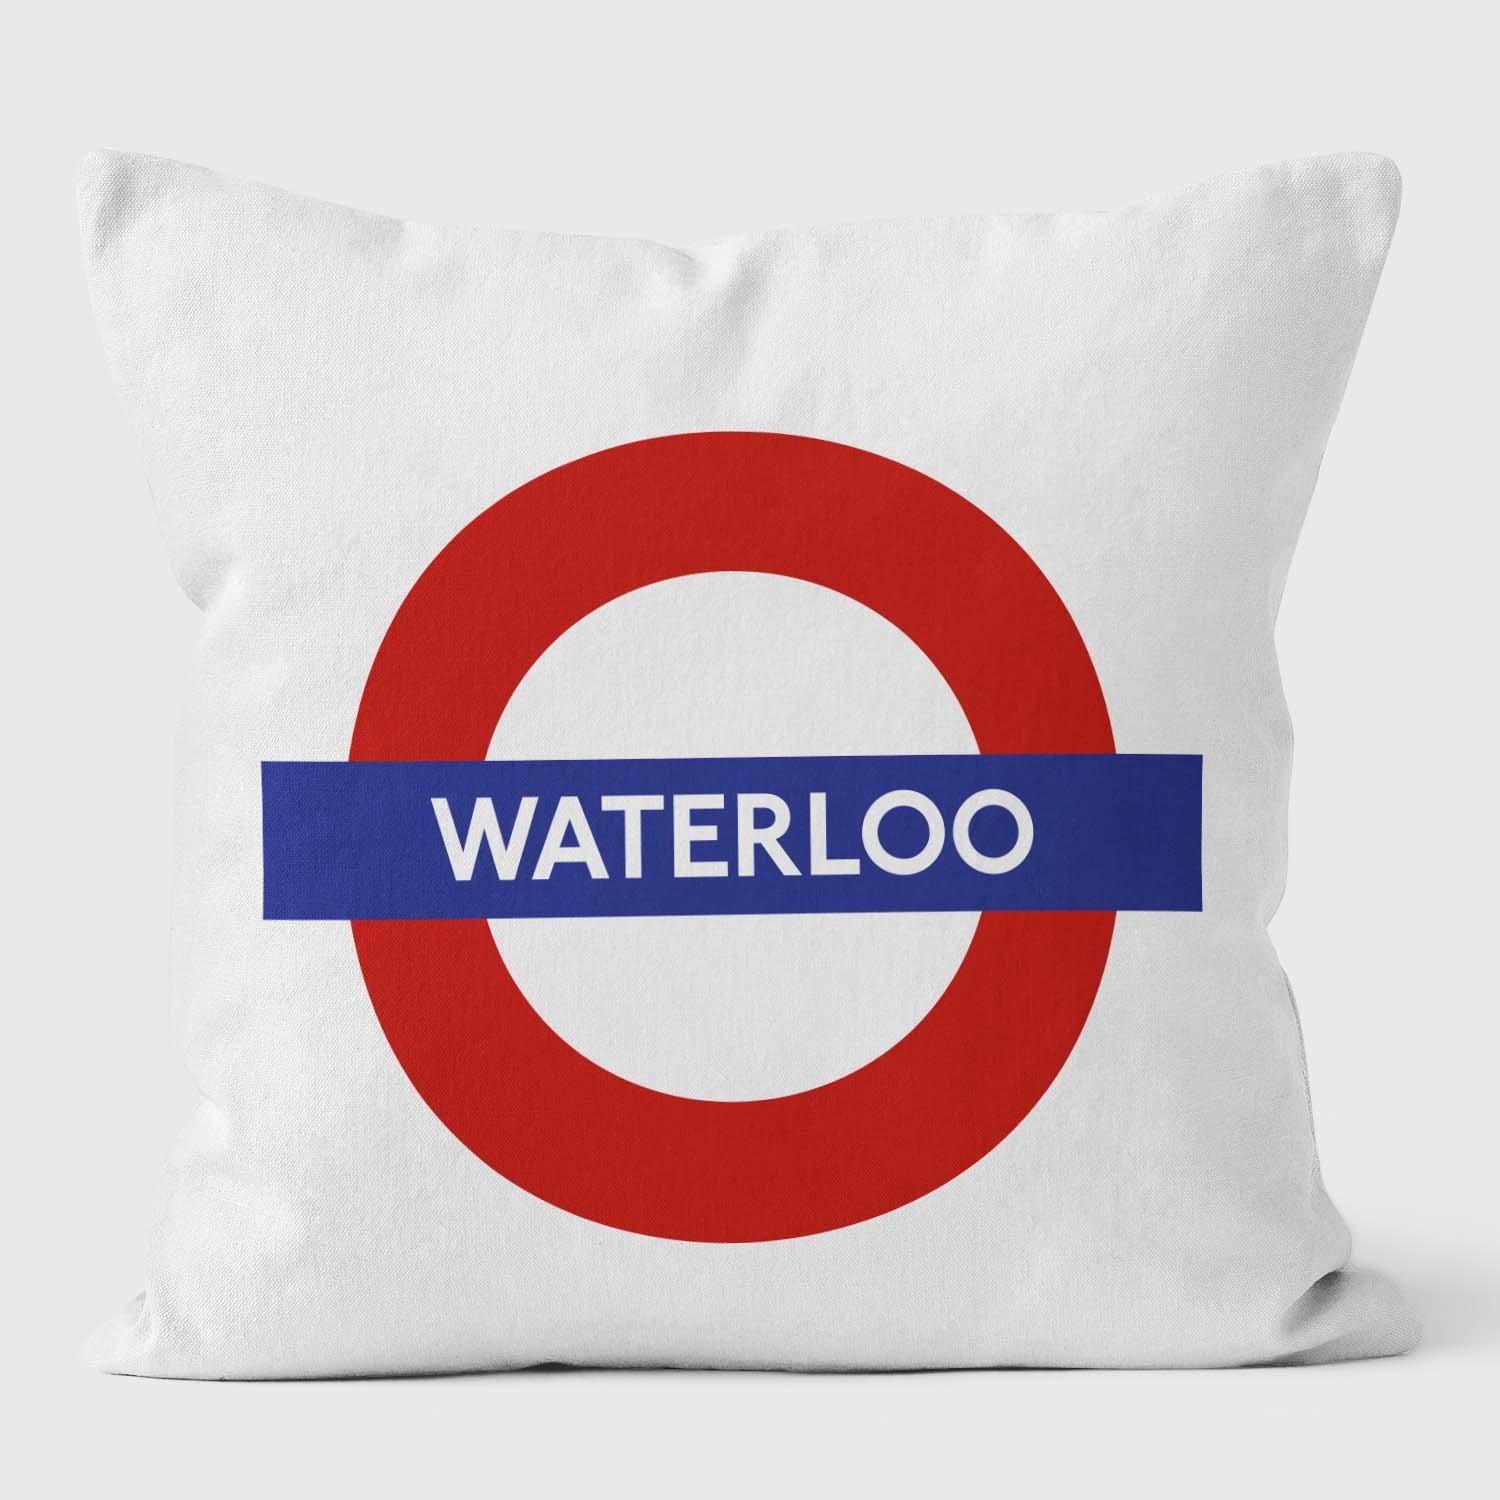 Waterloo London Underground Tube Station Roundel Cushion - Handmade Cushions UK - WeLoveCushions